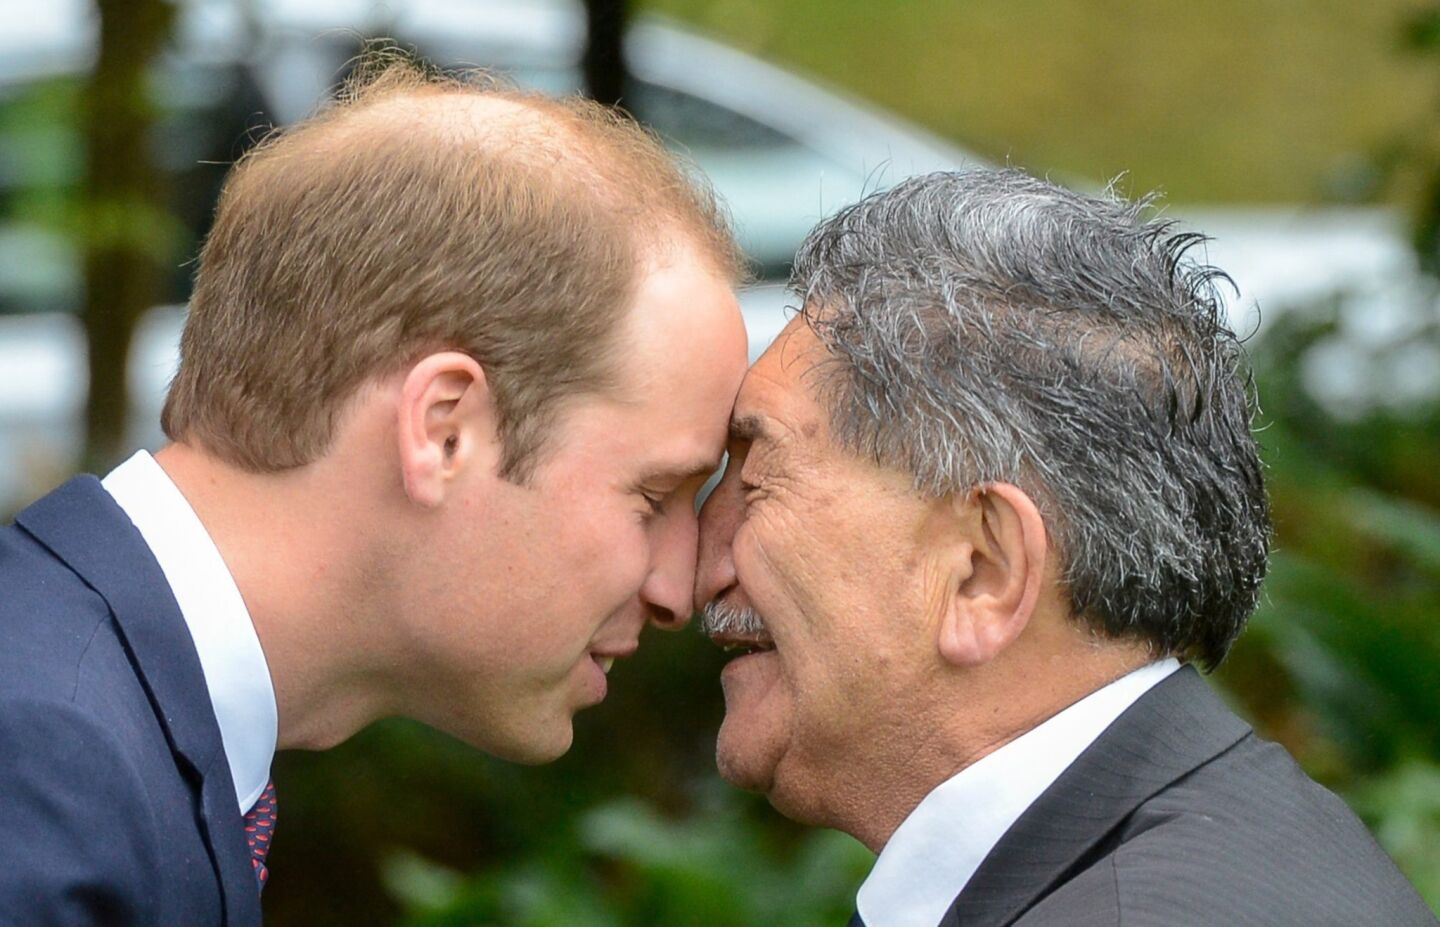 Britain's Prince William receives a hongi, a traditional Maori greeting, from Maori elder Lewis Moera.